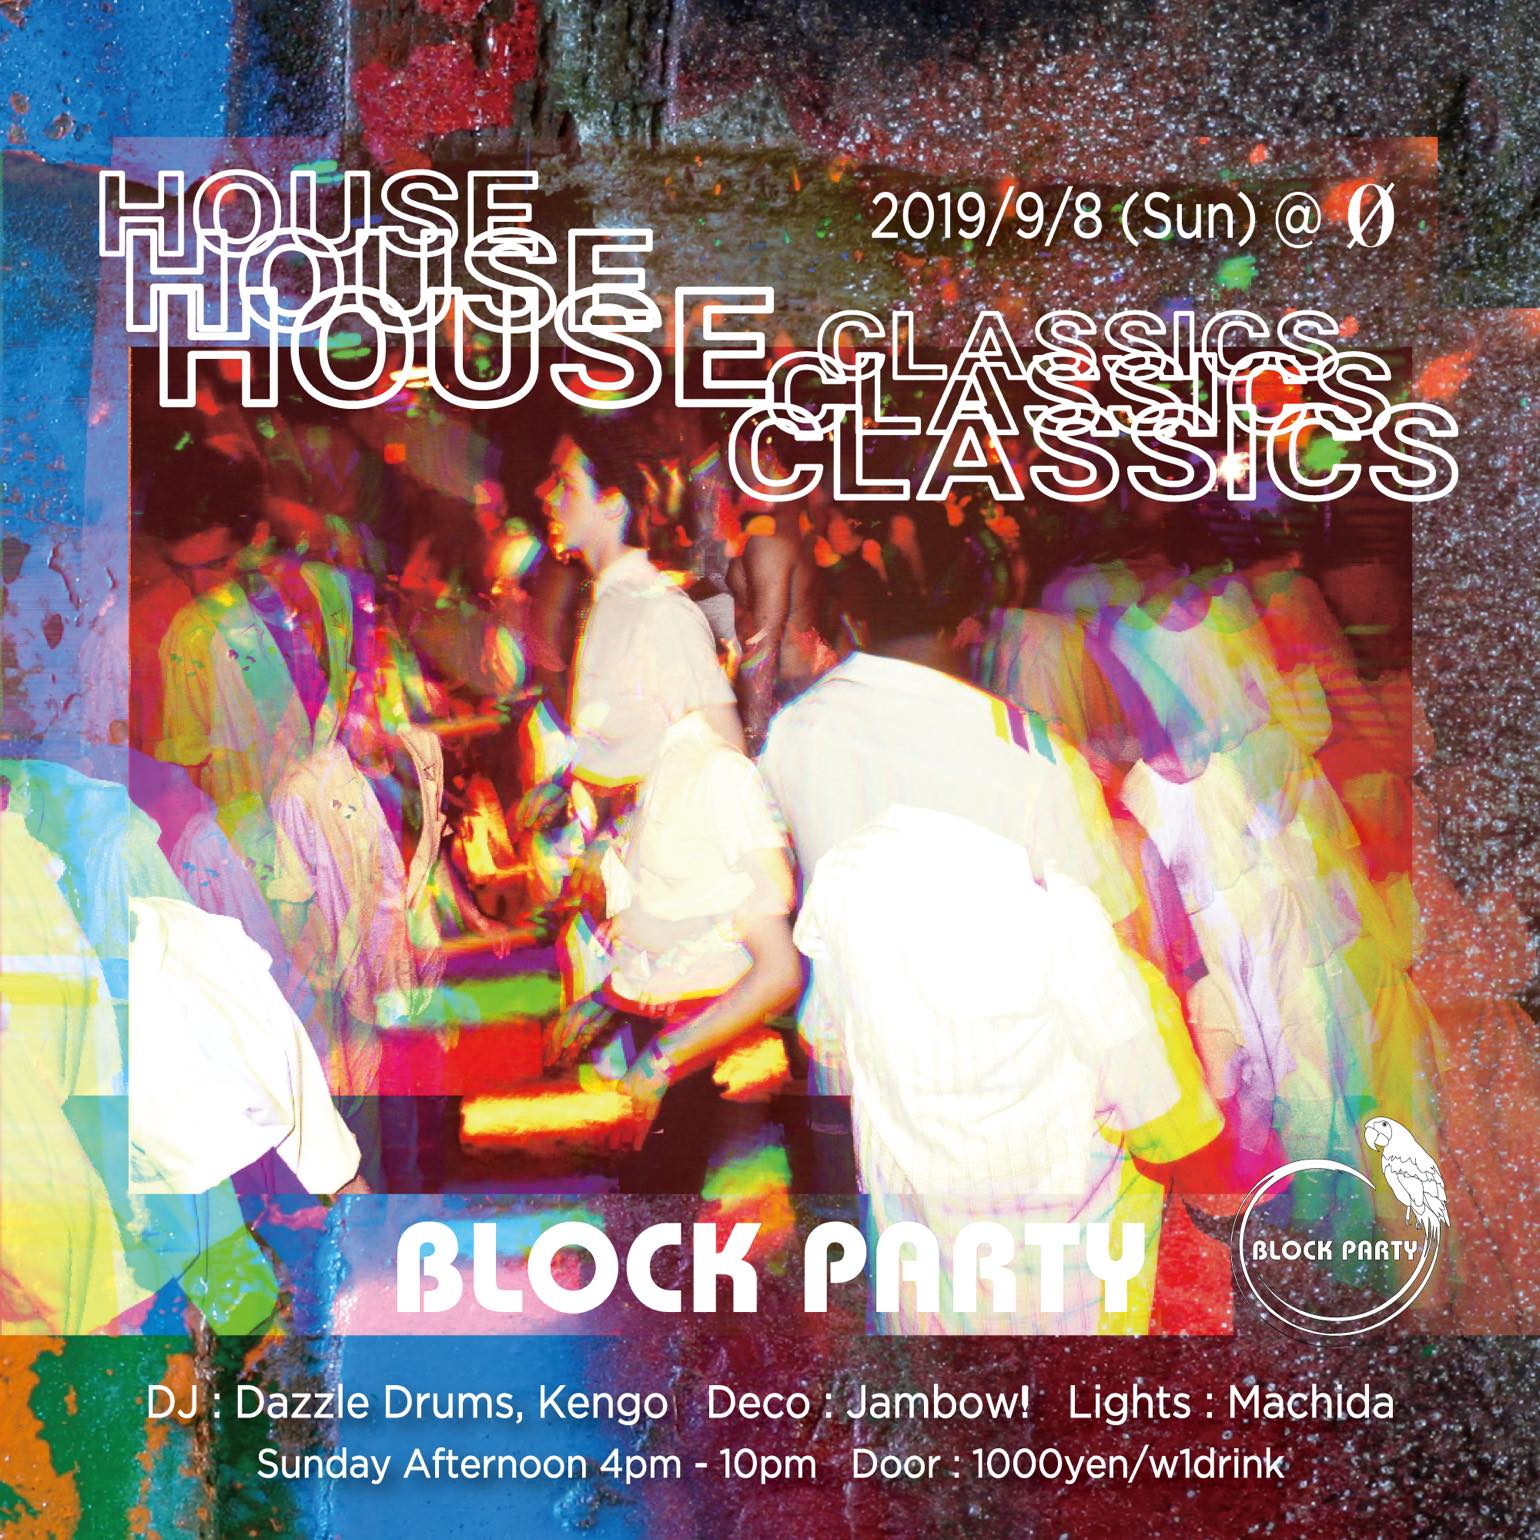 Block Party “House Classics”